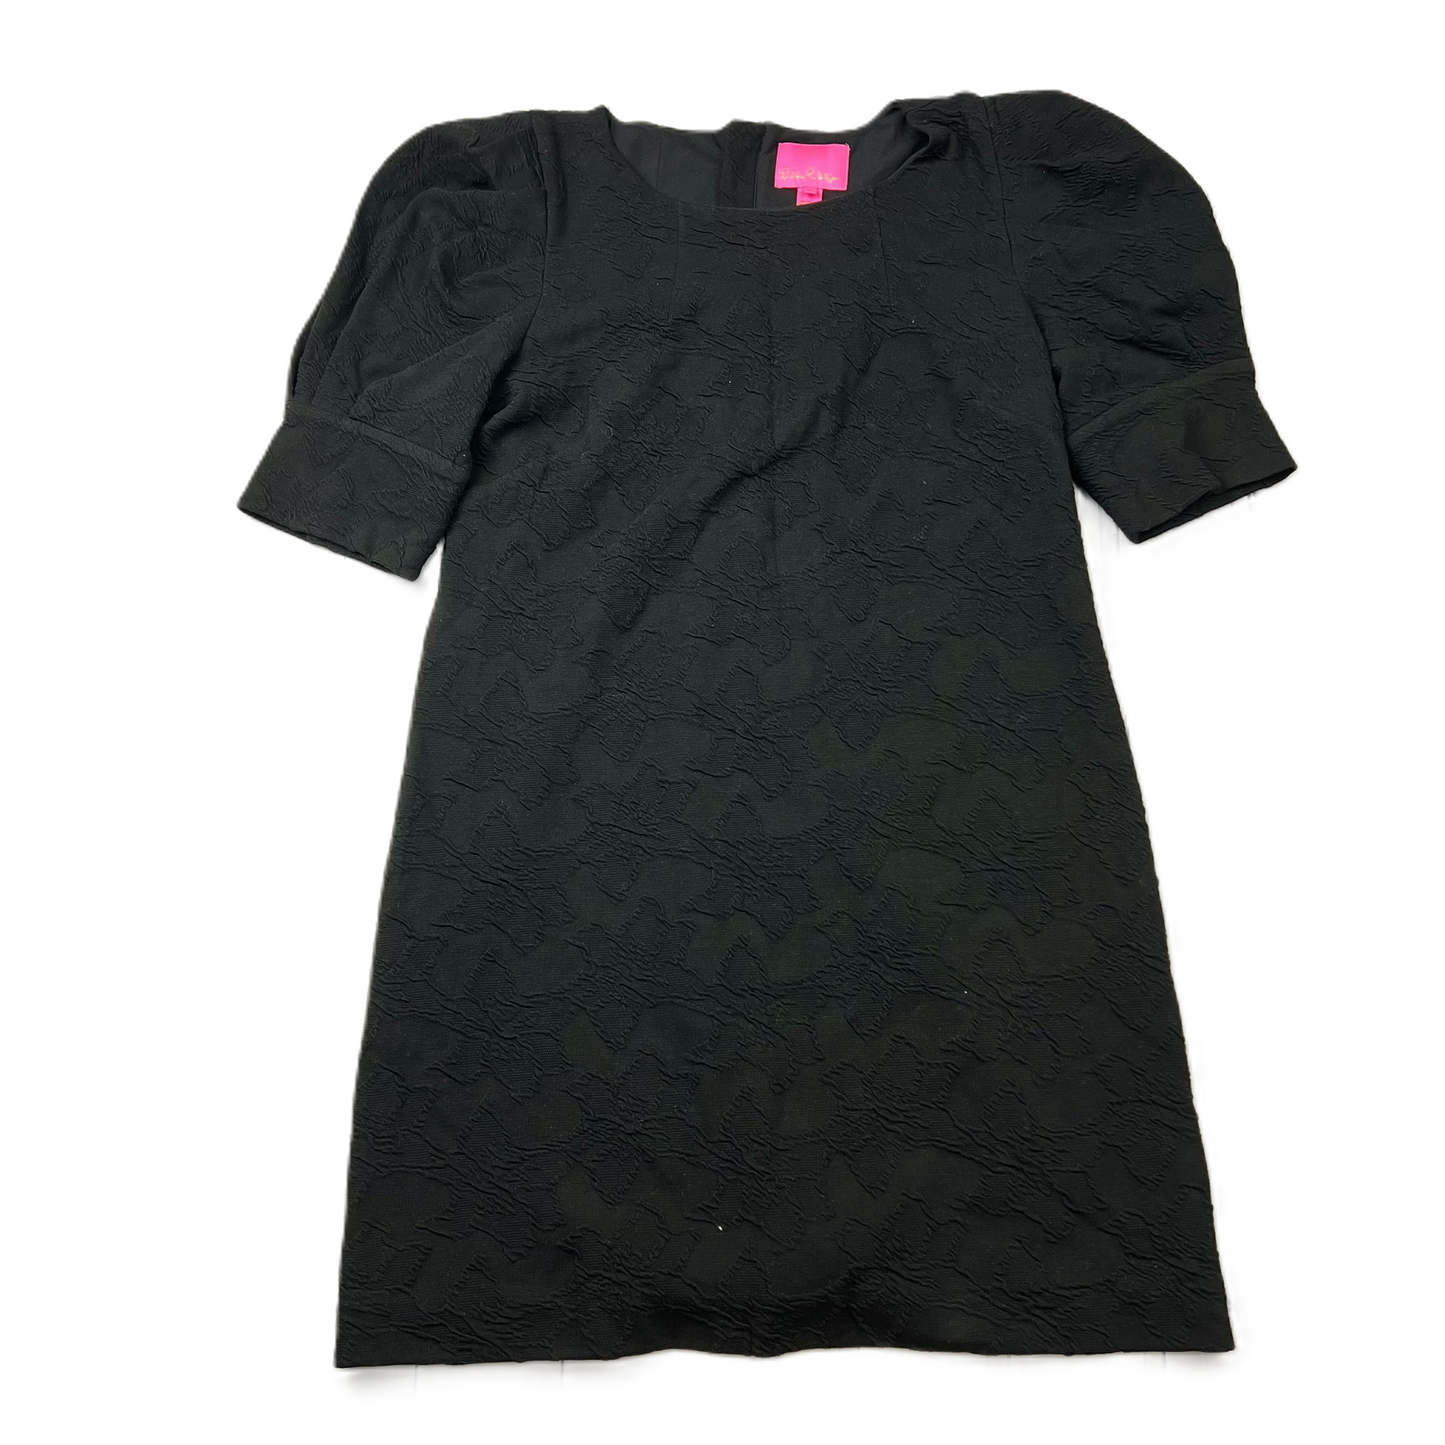 Black Dress Designer By Lilly Pulitzer, Size: Xl